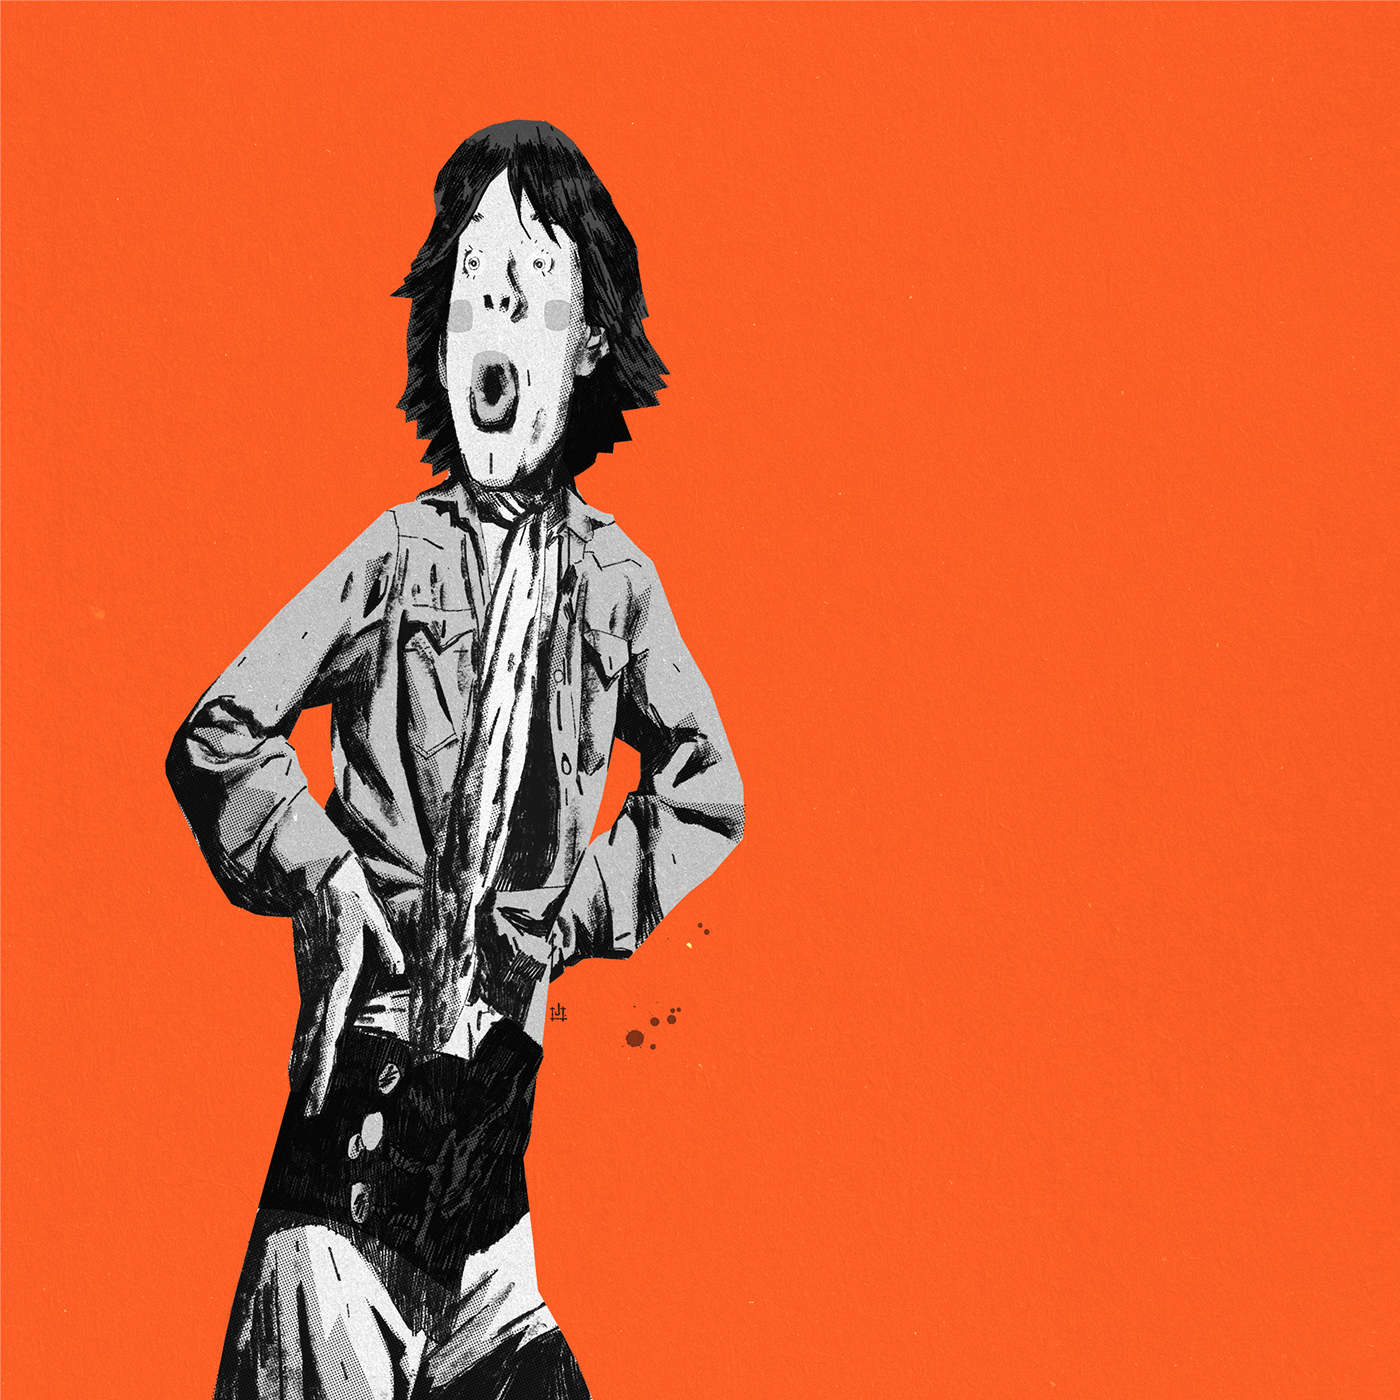 british Celebrity dancing live music London Mick Jagger monochrome orange pop culture portrait